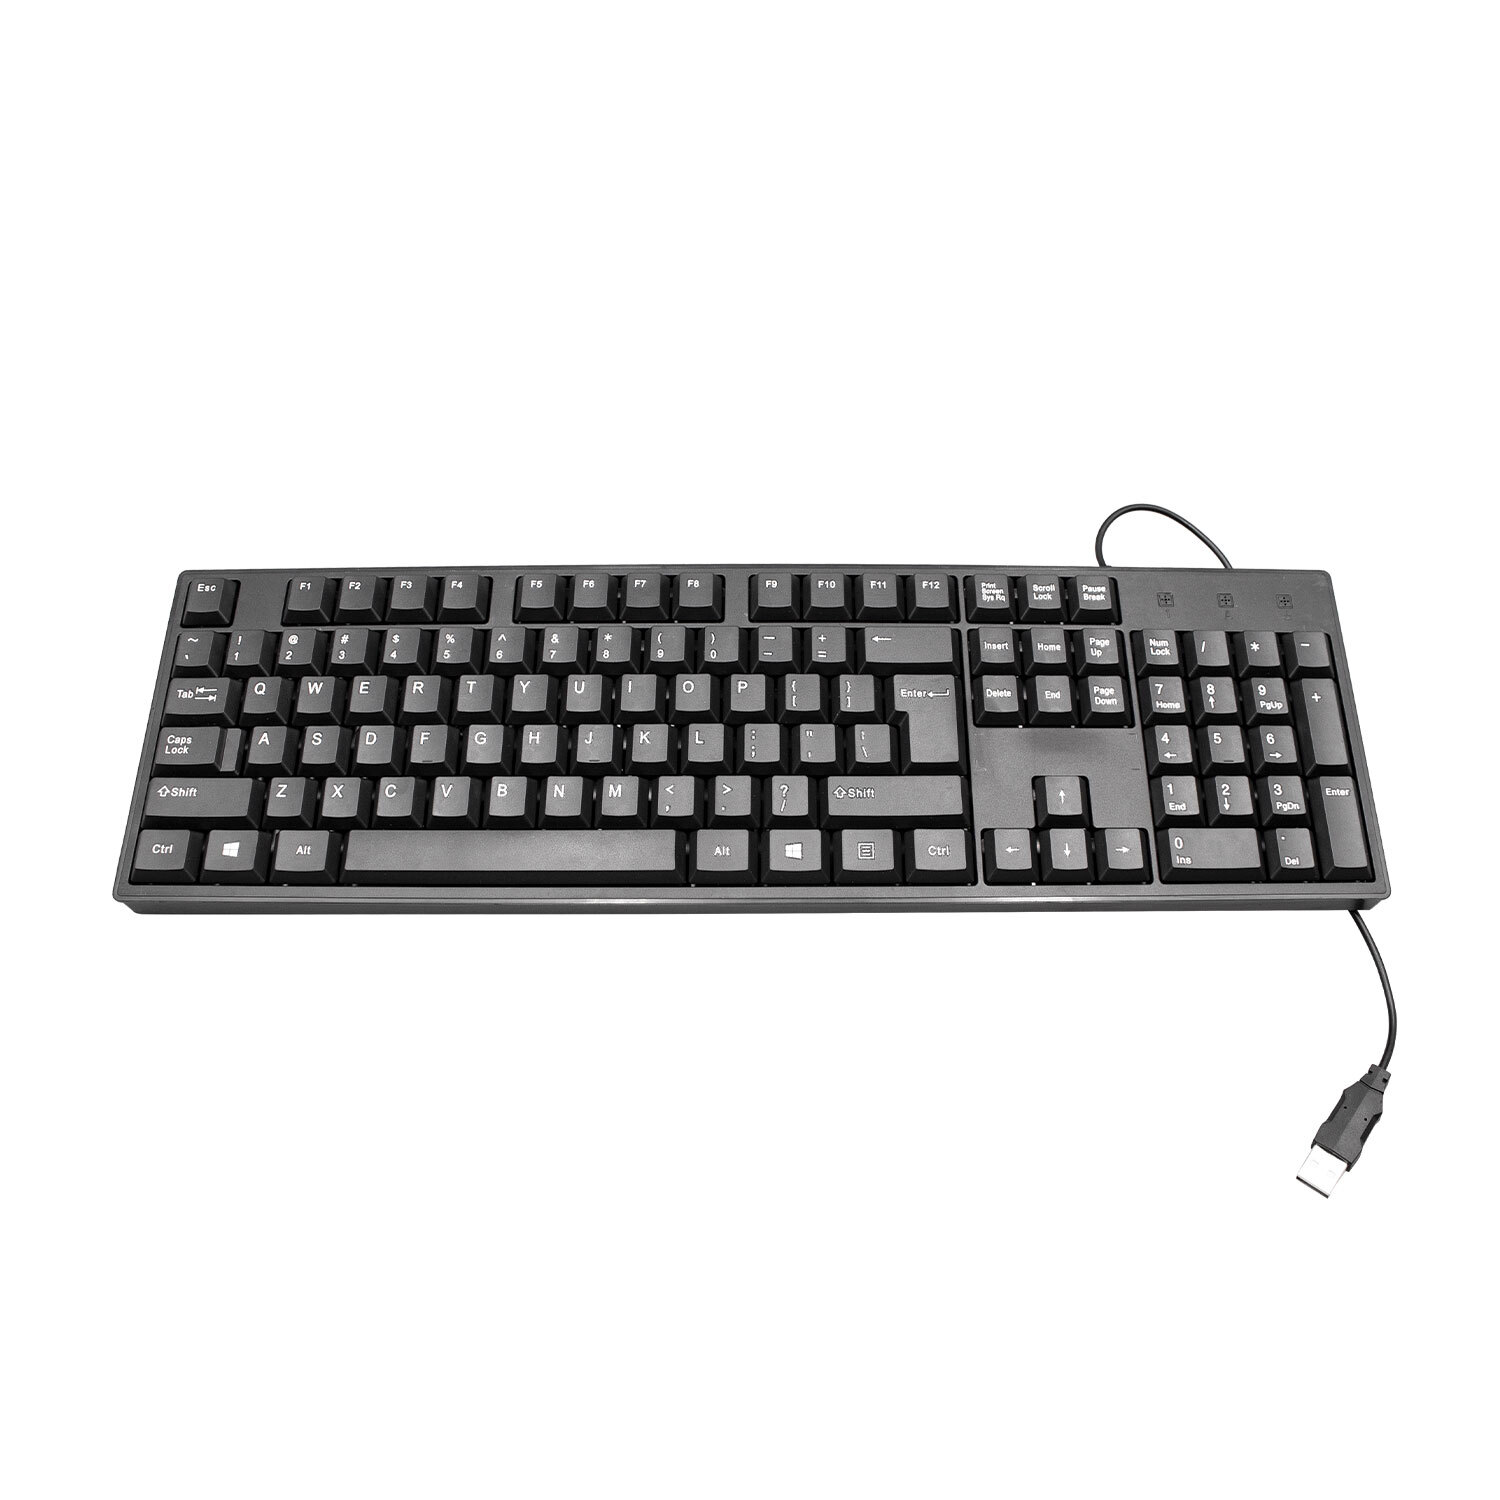 USB Wired Keyboard Image 1